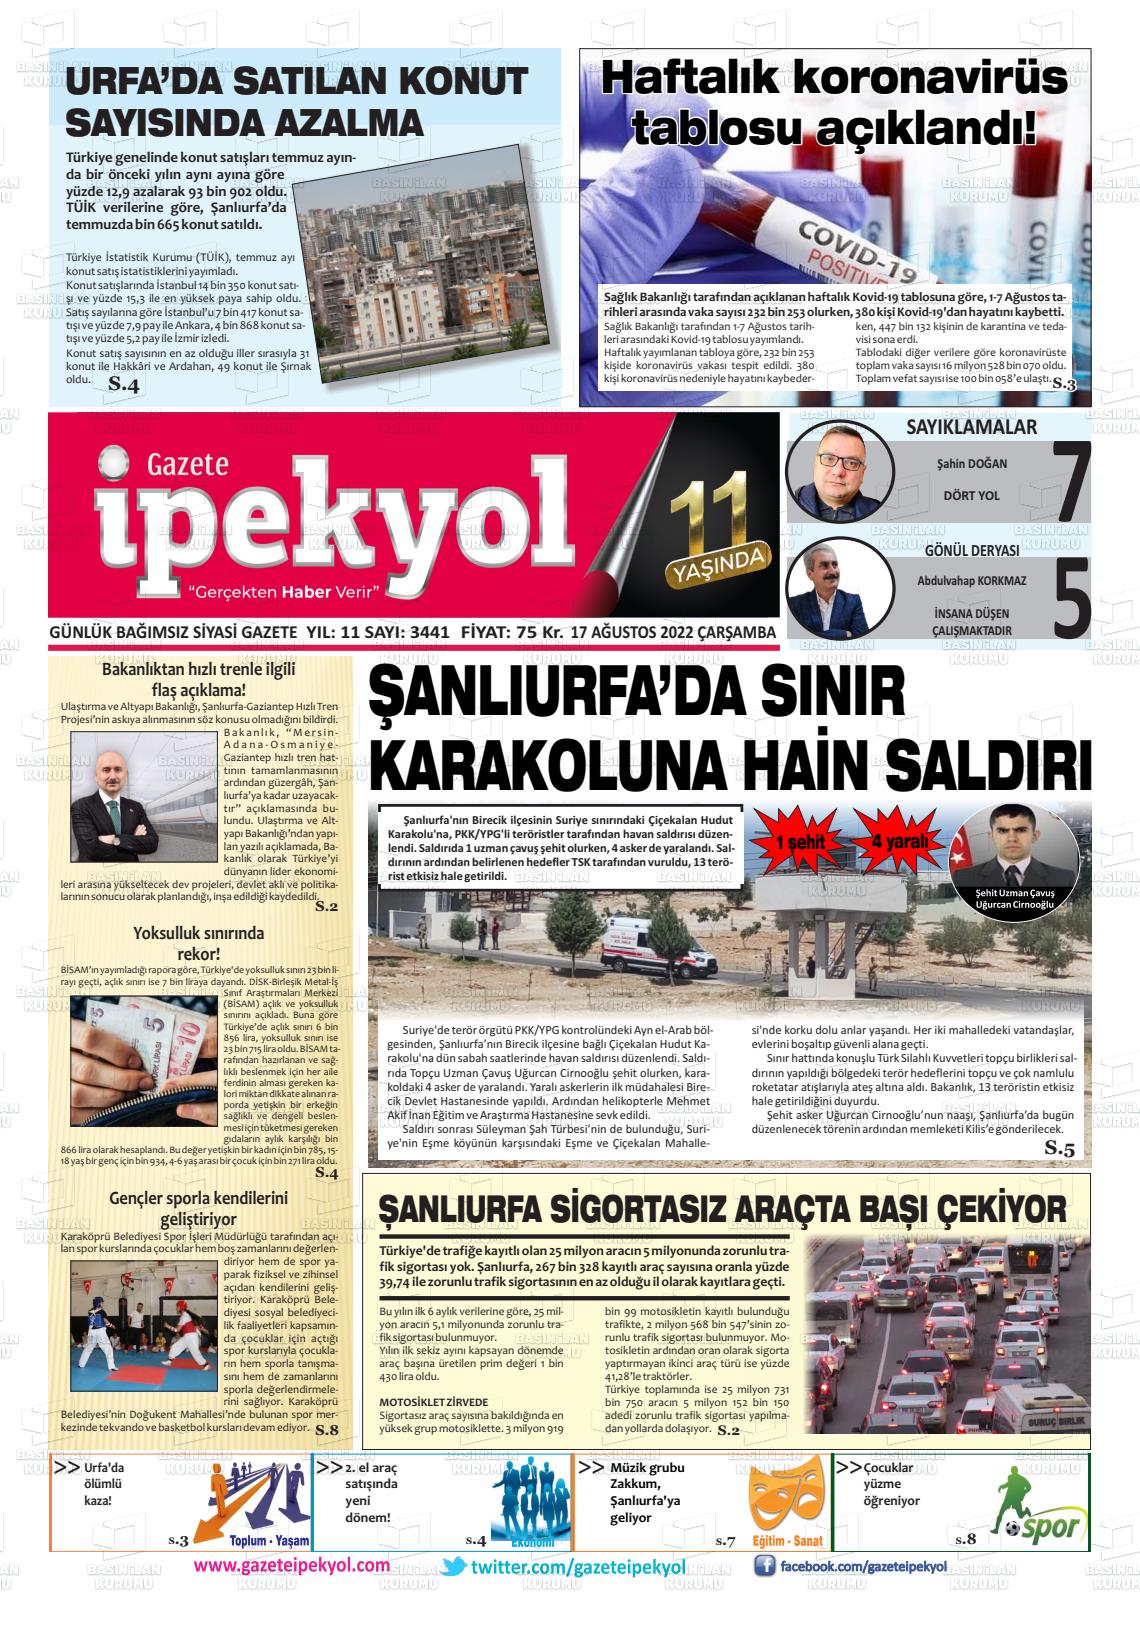 17 Ağustos 2022 Gazete İpekyol Gazete Manşeti